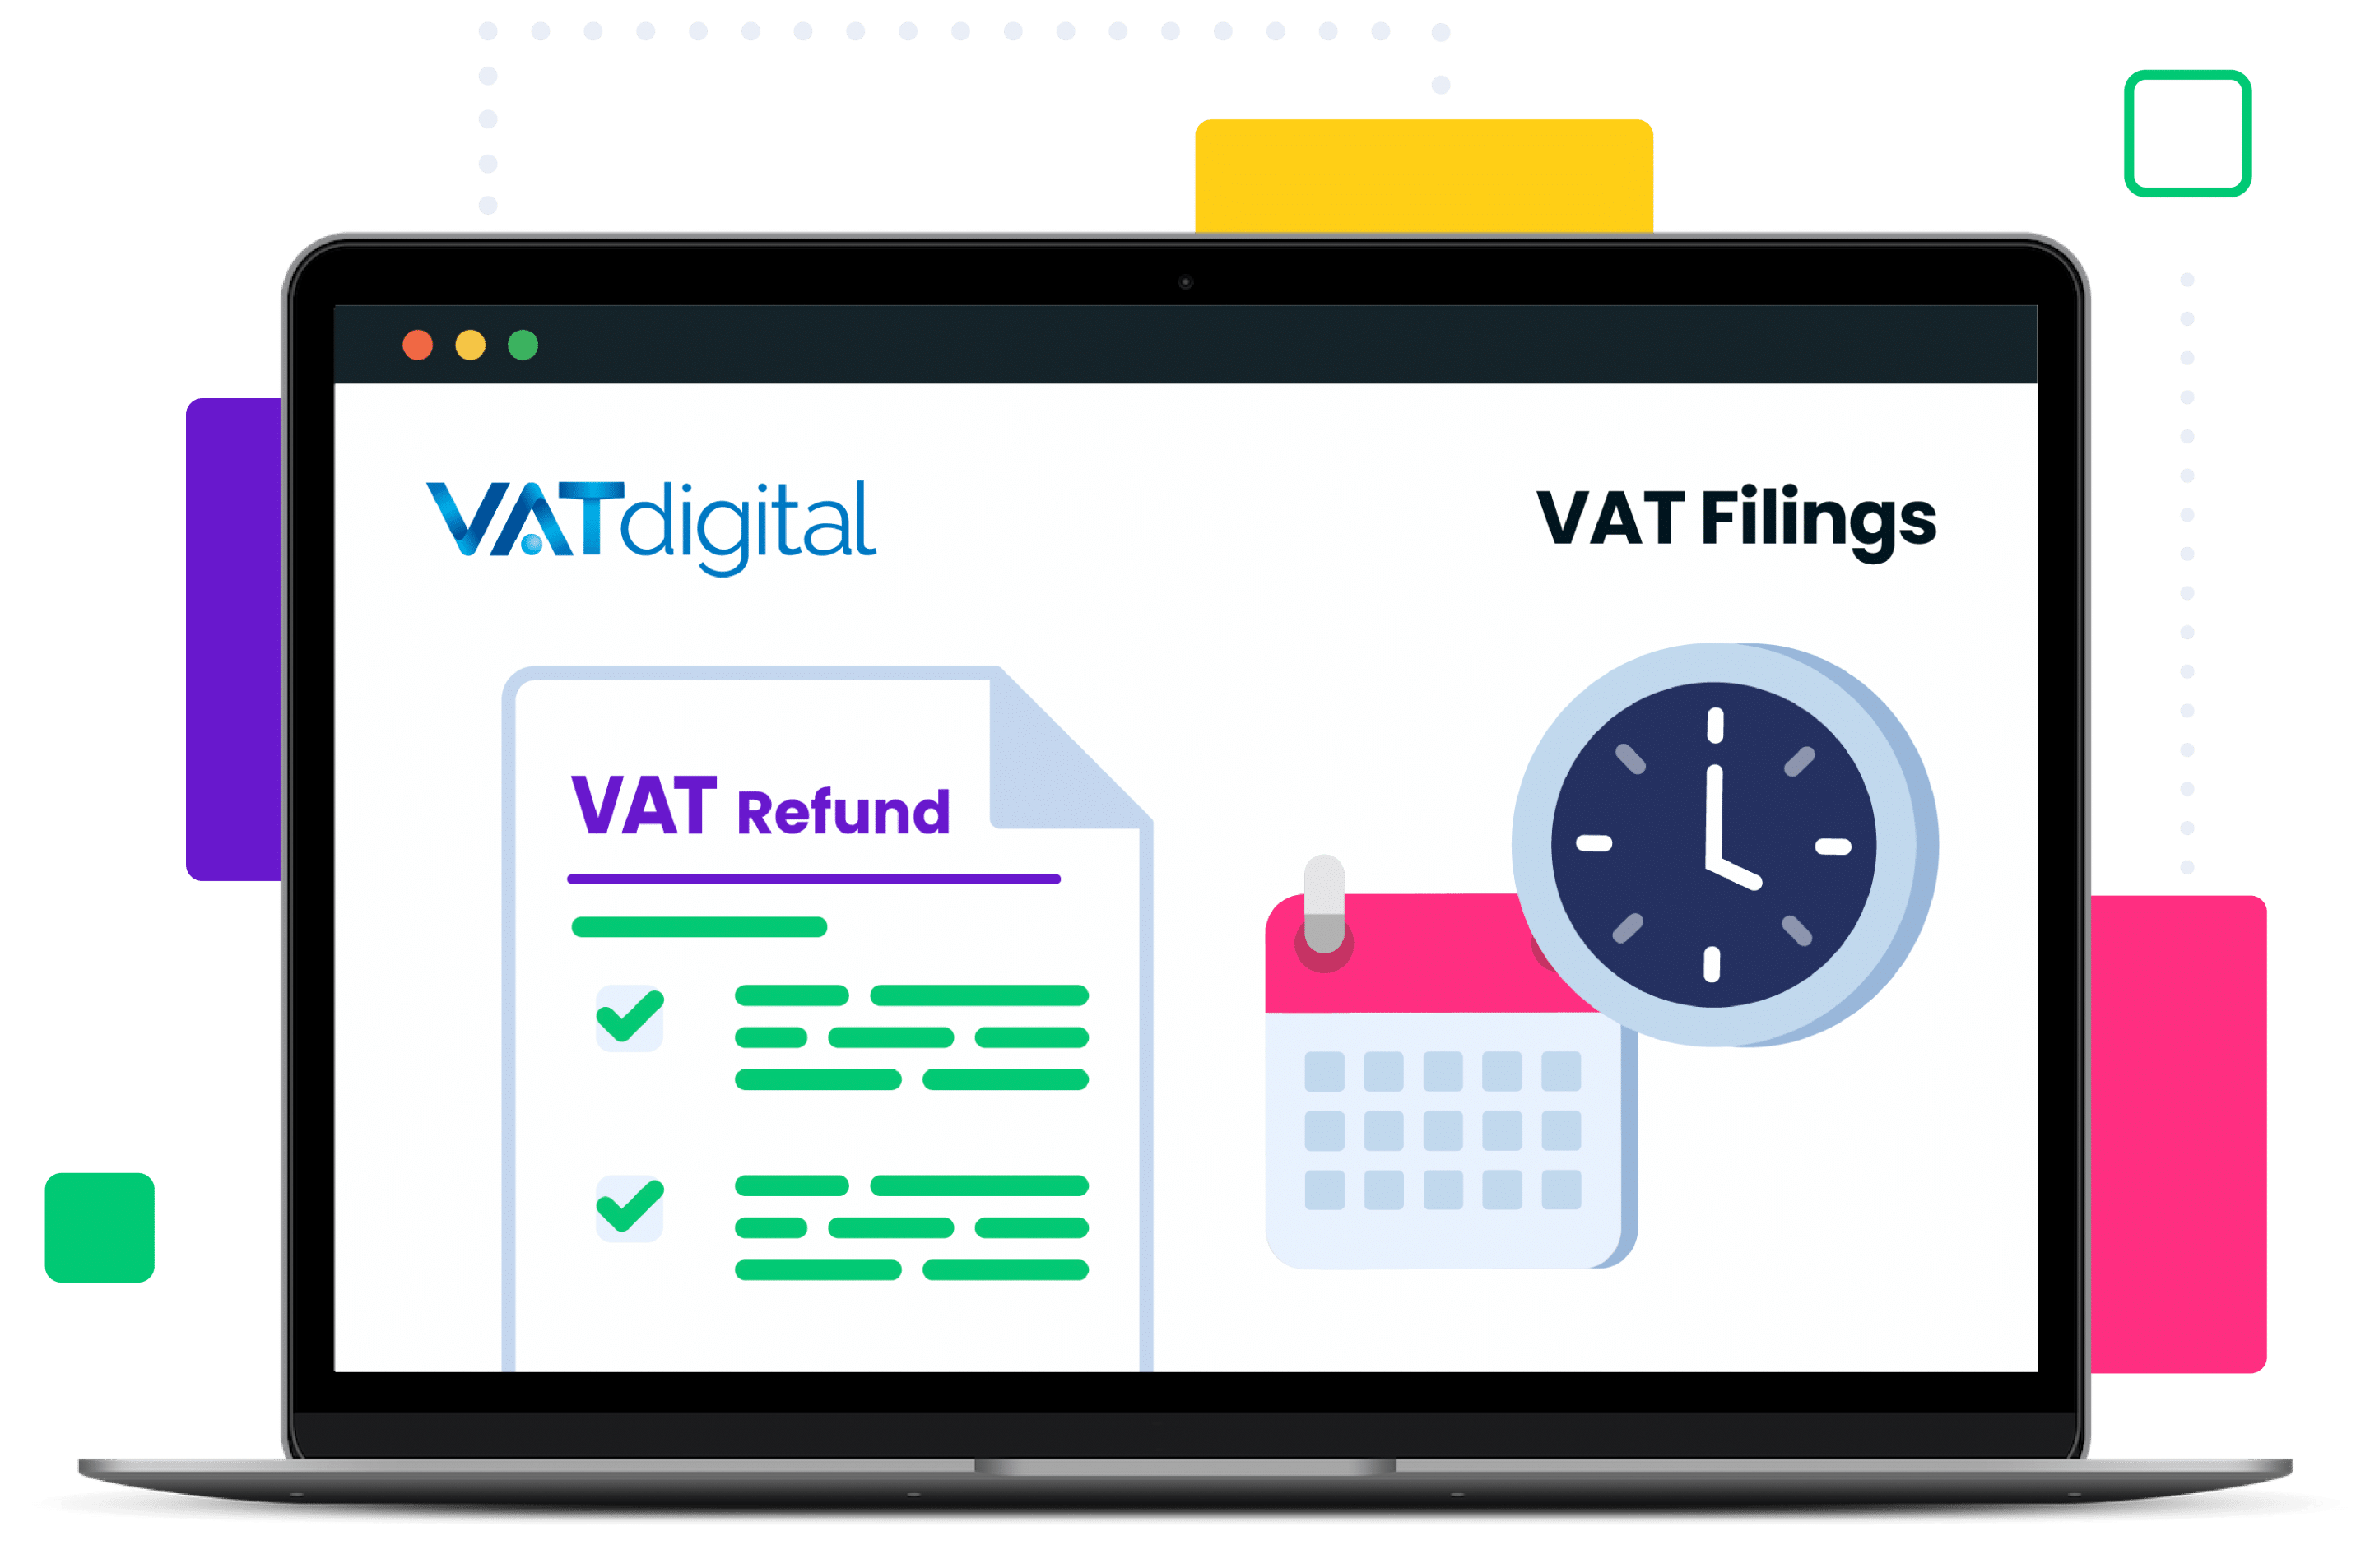 VAT Filings laptop